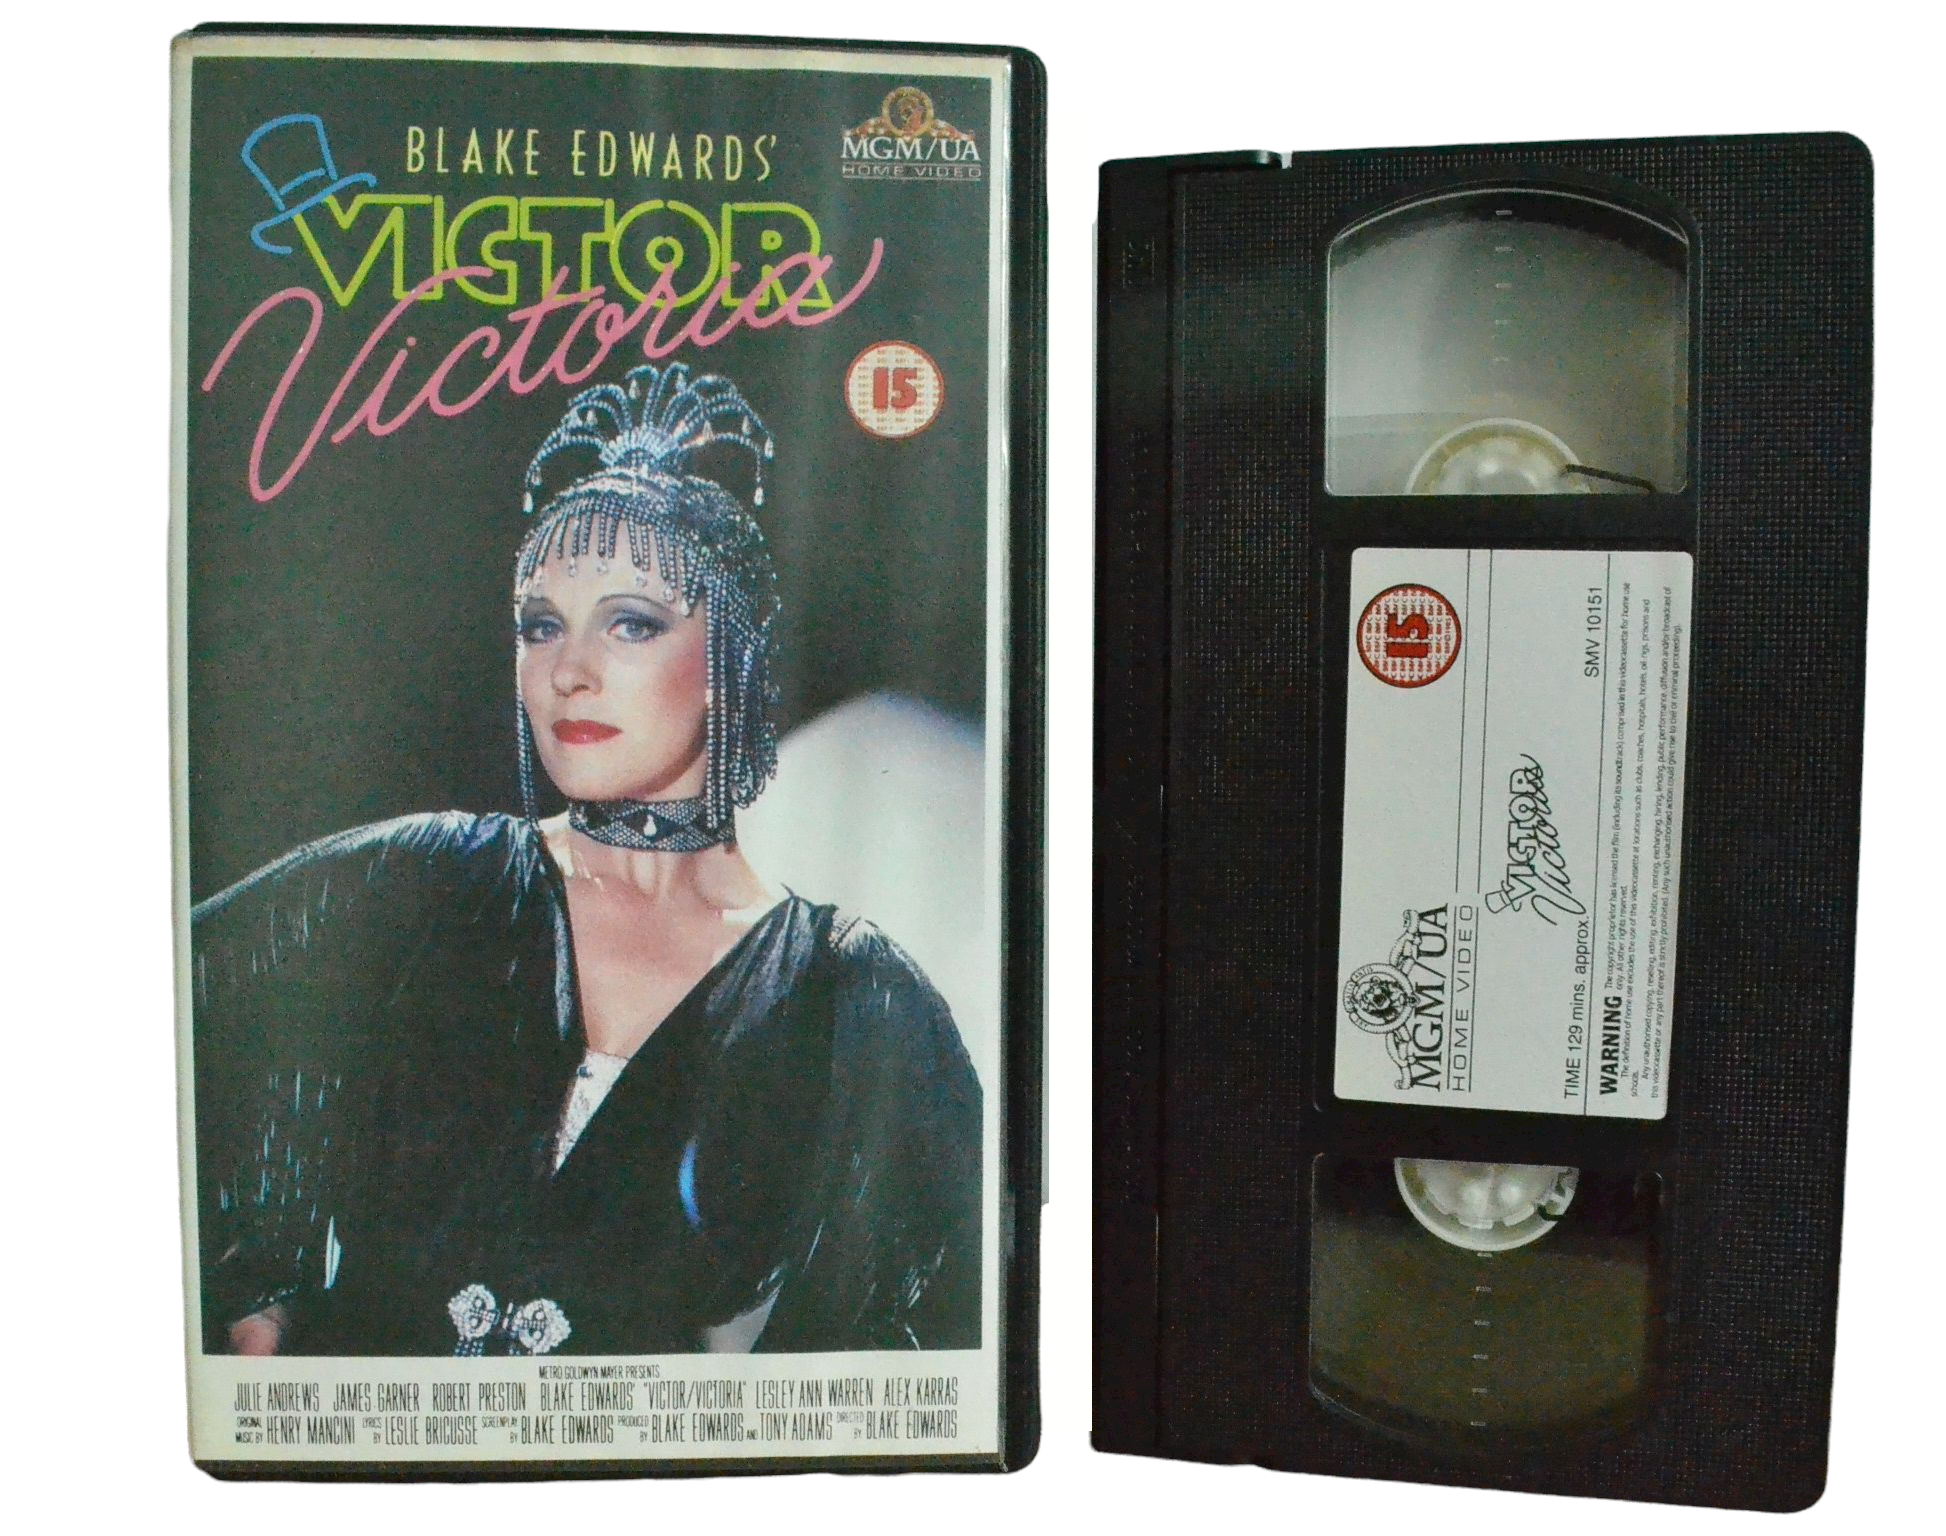 Blake Edward's Victor Victoria - Julie Andrews - MGM/UA Home Video - Musical - Pal VHS-